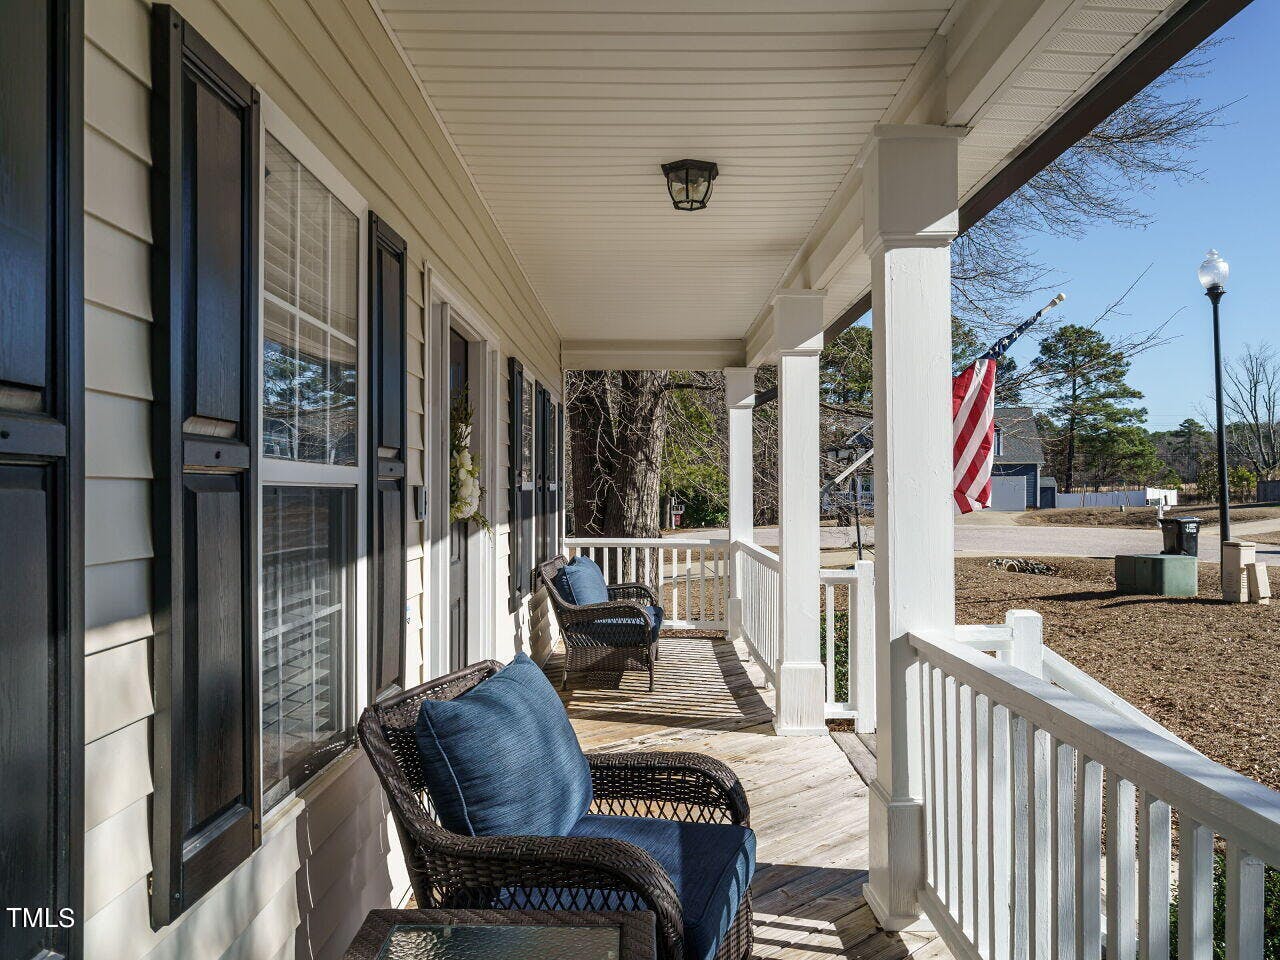 003-1280x960-front-porch